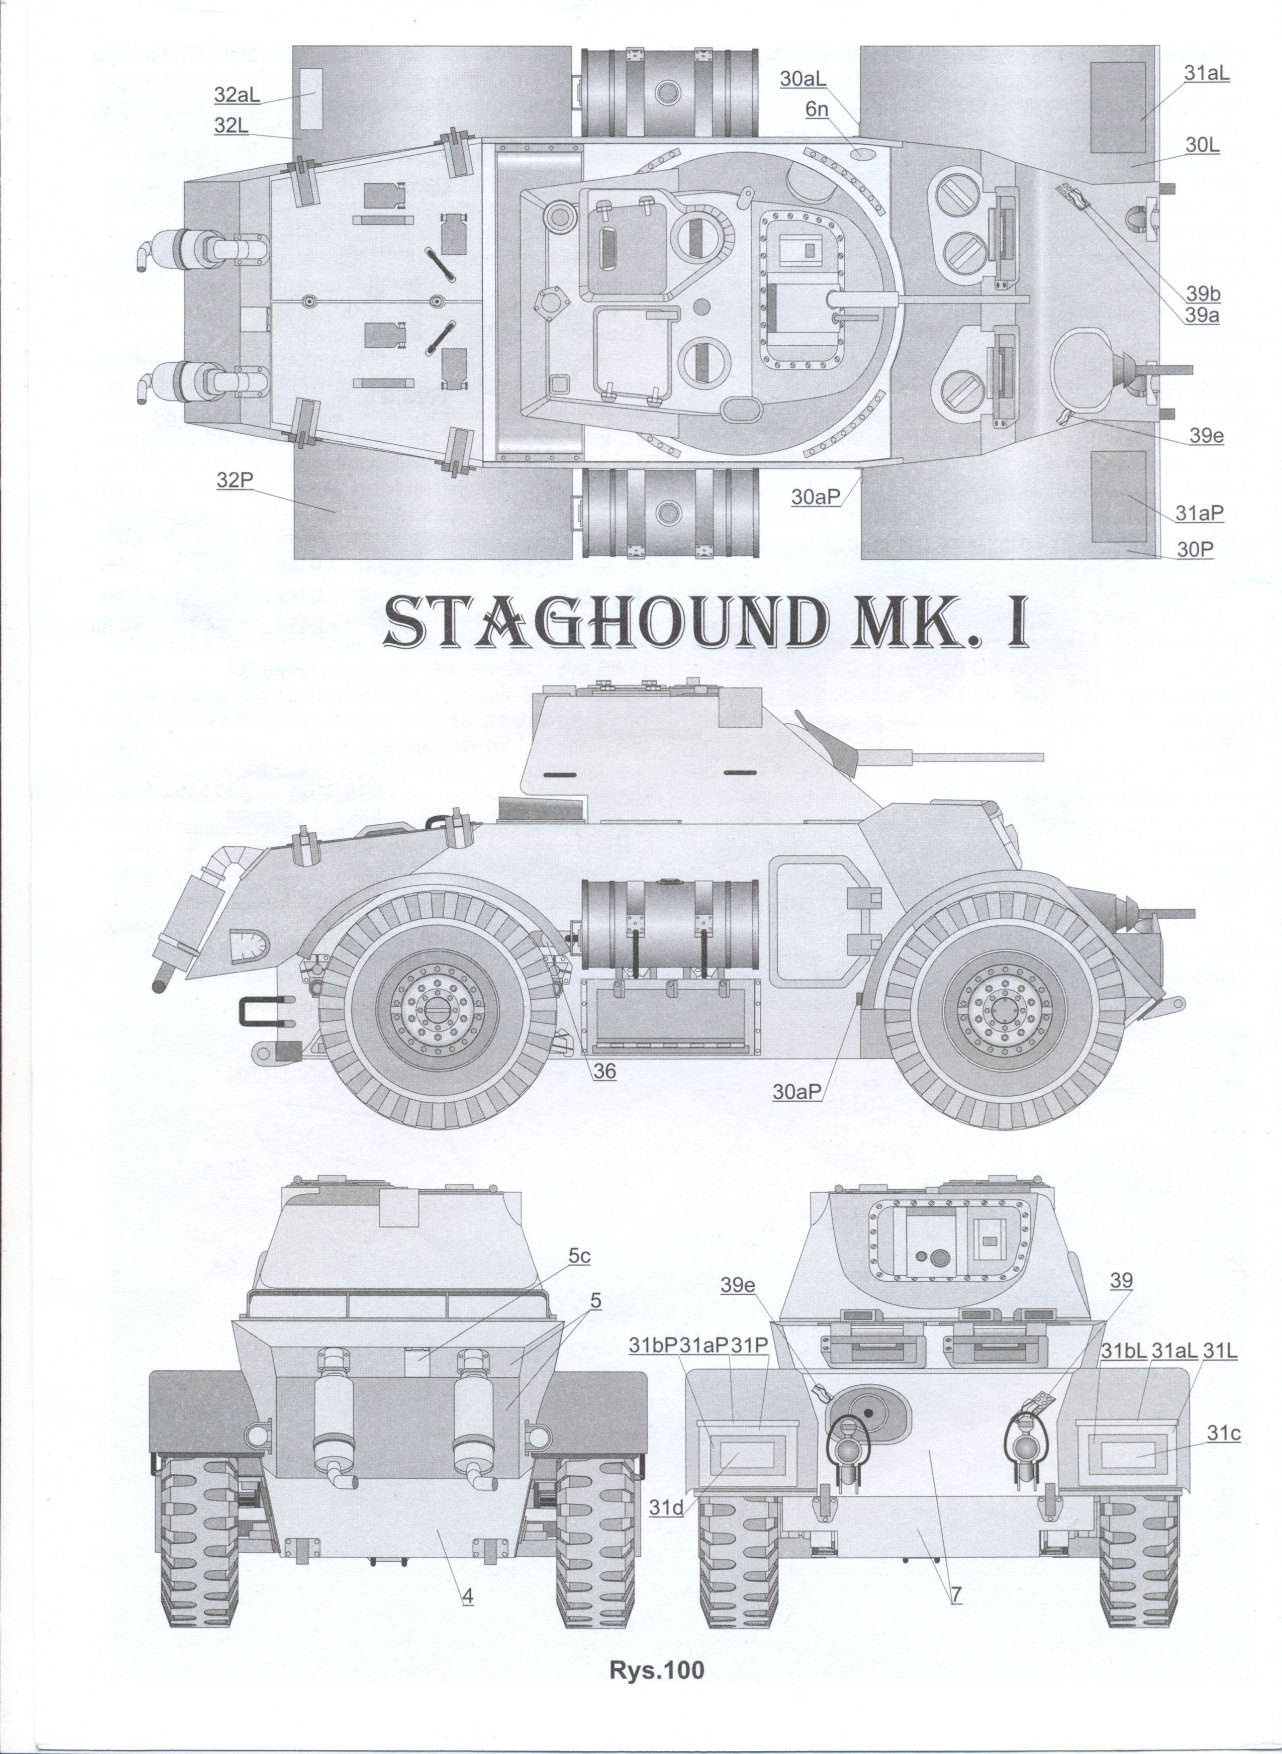 14 - StagHound_Mk_I - instr05.jpg